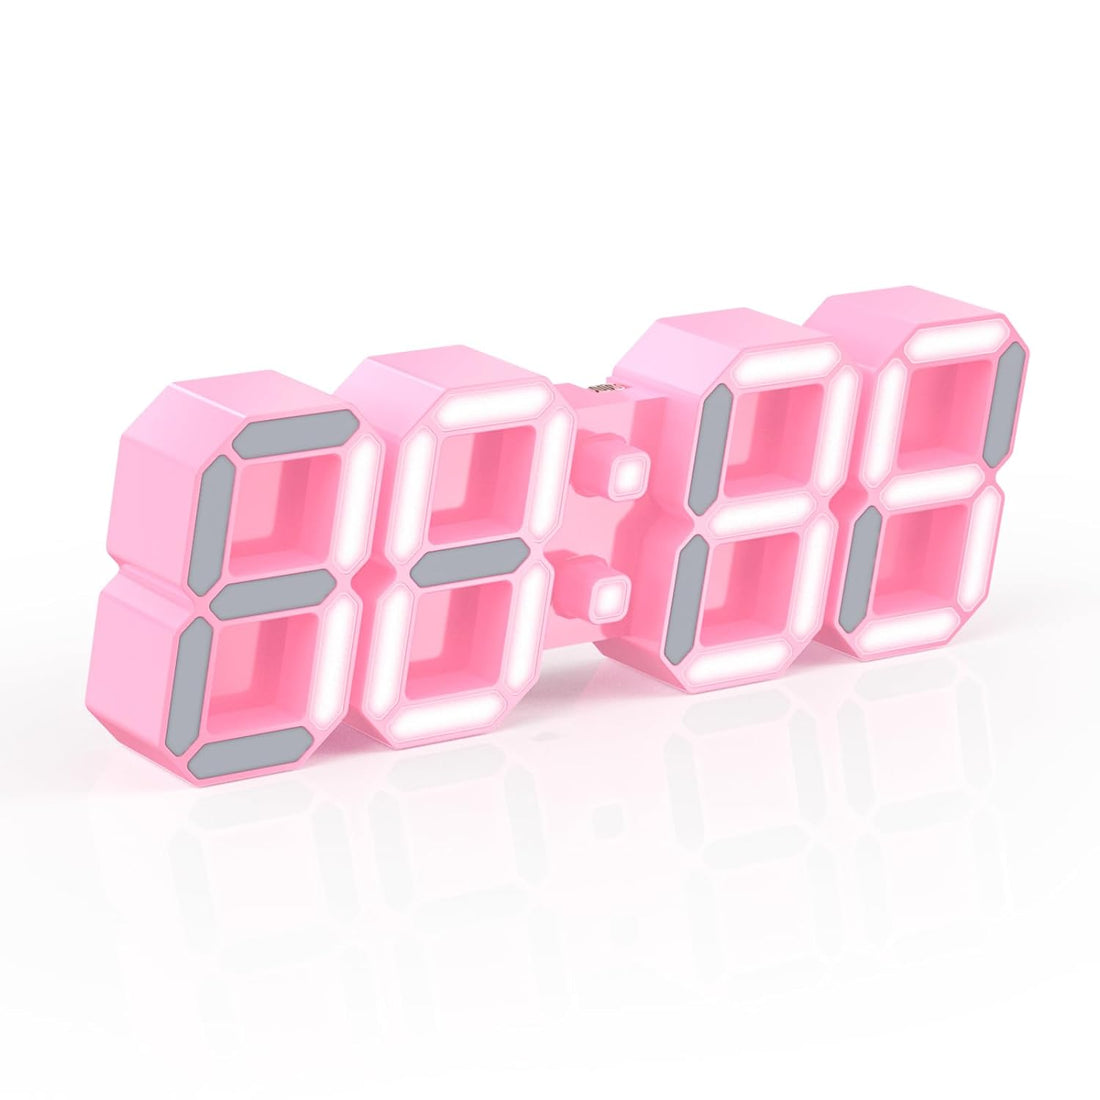 KWYDYP 4.9'' Mini 3D LED Digital Clock - Dual Alarm Clock with Remote, Magnetic, 12/24H, Date & Temp, Auto L1-L4 Brightness, USB-Powered, Nightlight Gaming Set Decor Gifts Clock for Kids - Pink